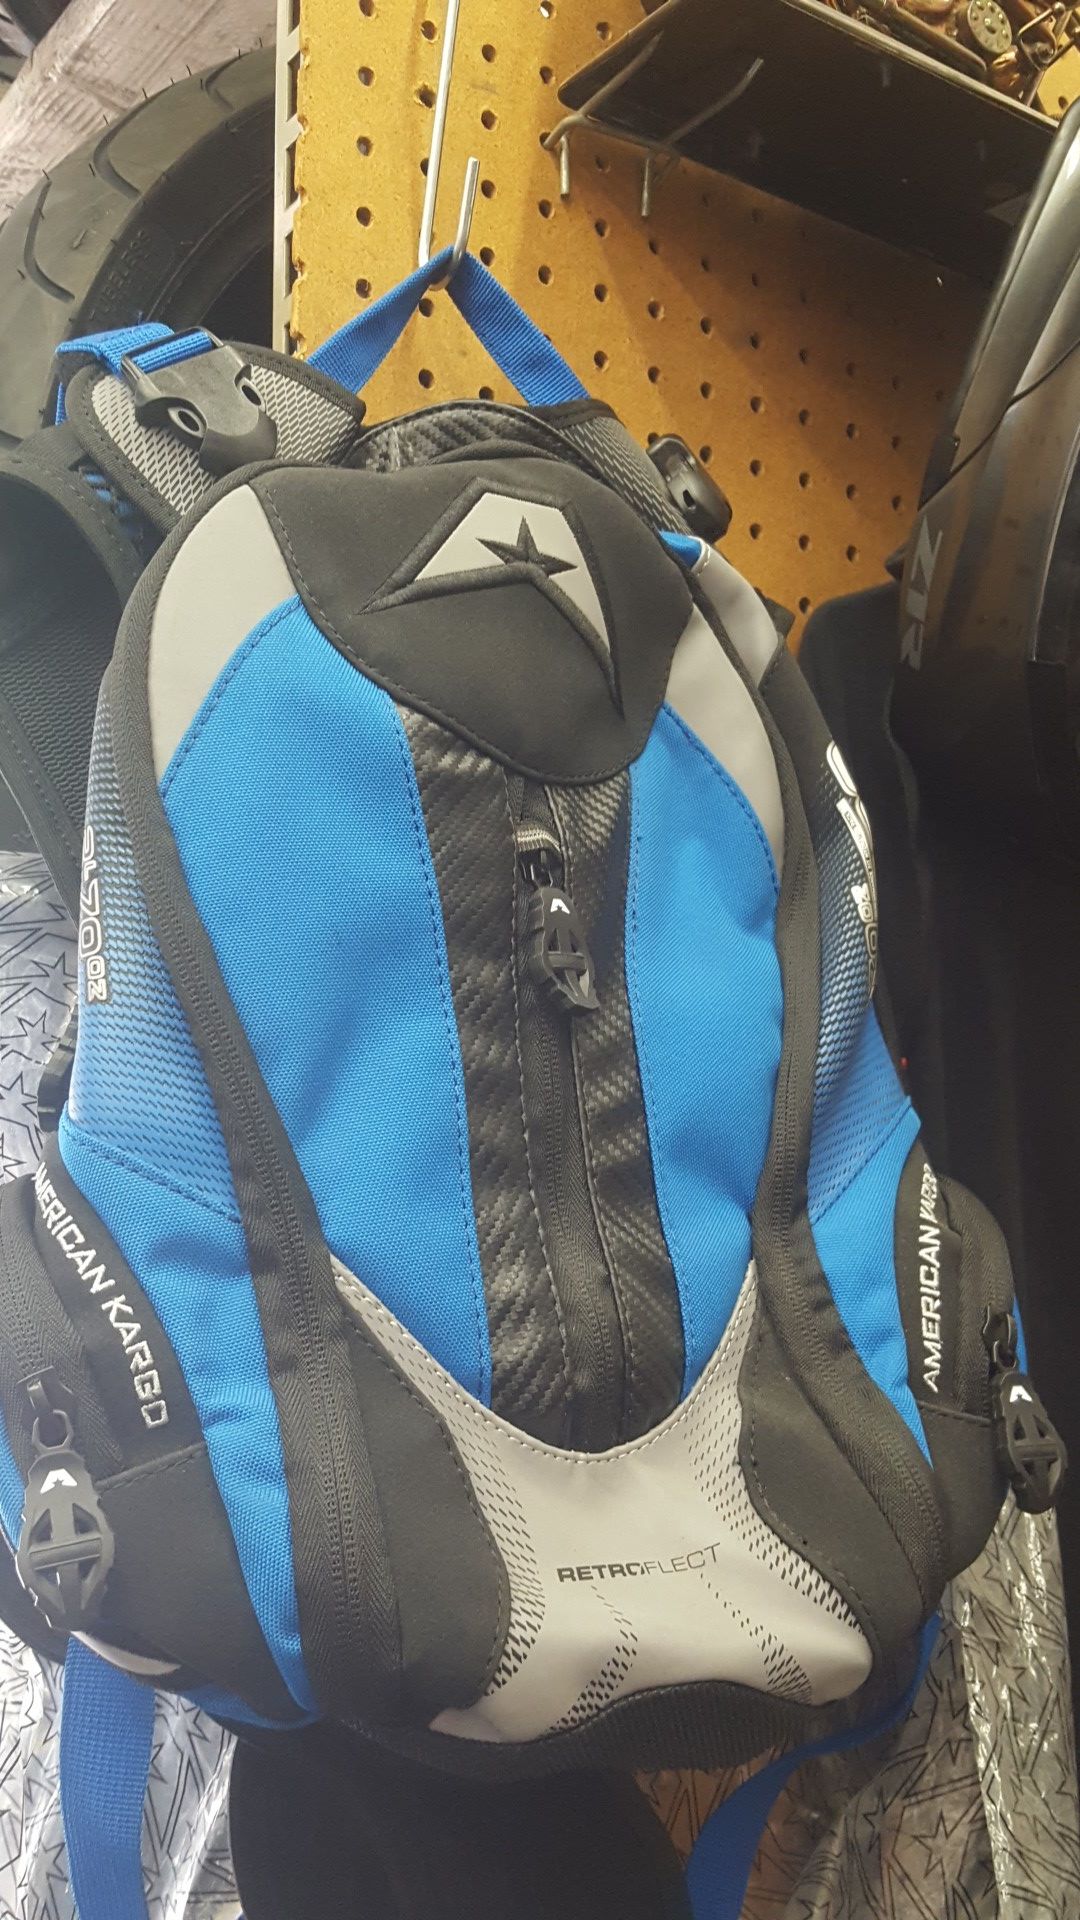 American Kargo Hydration backpack